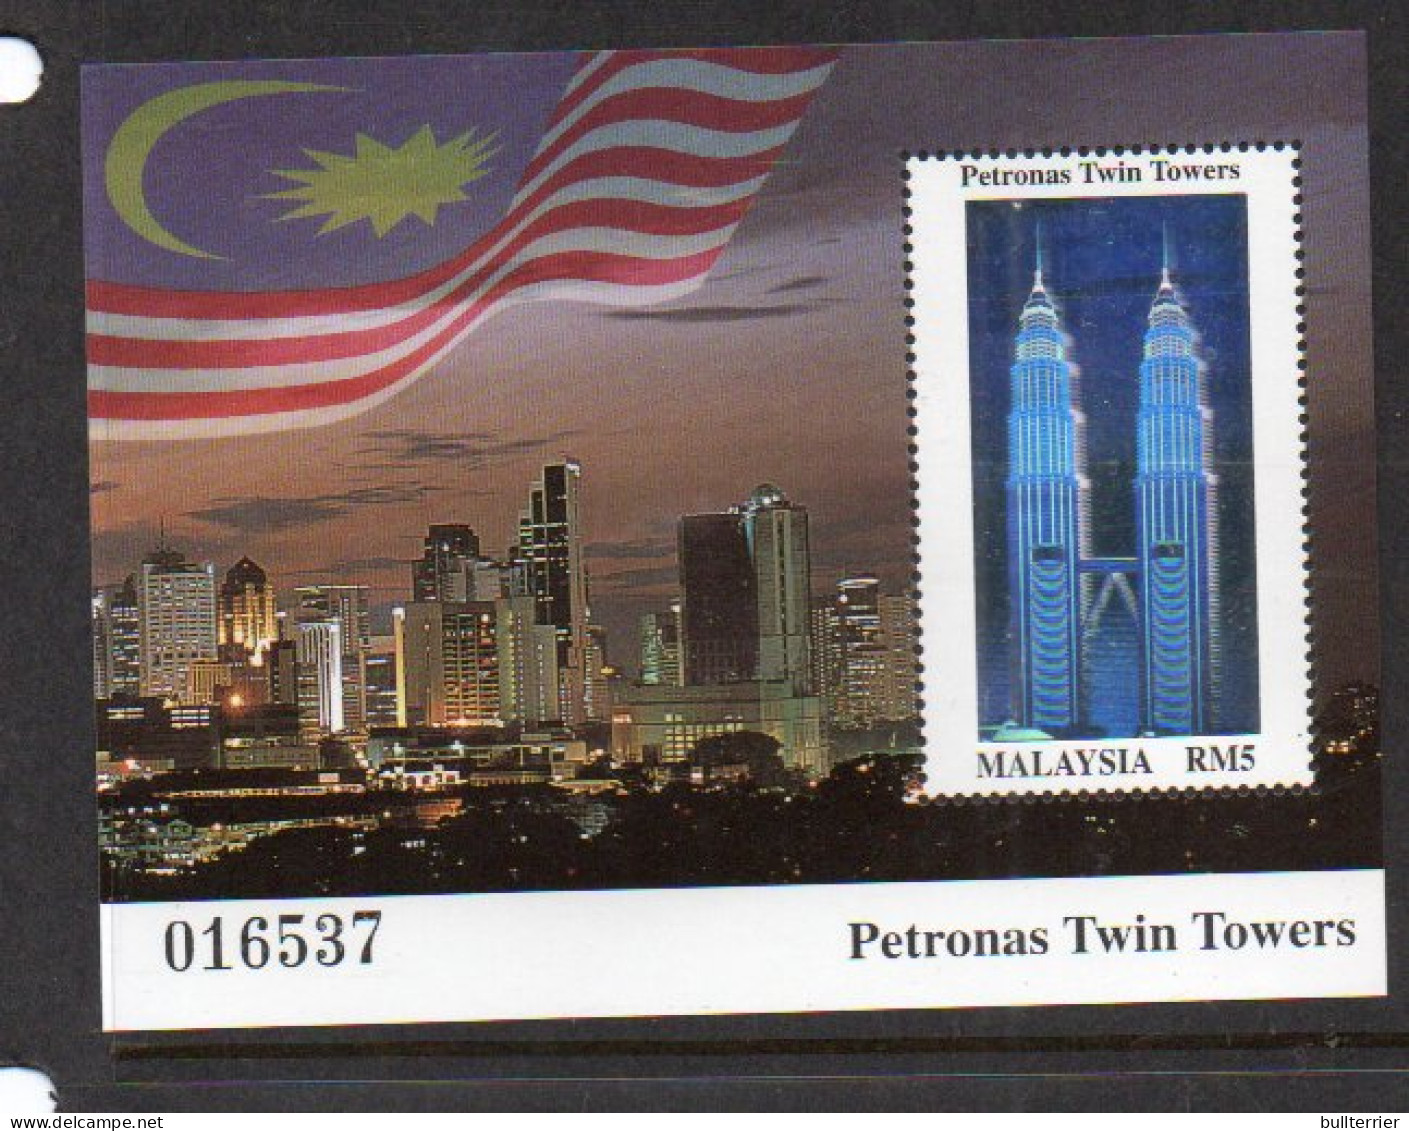 HOLOGRAMS - MALAYSIA - 1999 - PETRONAS TOWER  HOLOGRAM  SOUVENIR SHEET  MINT NEVER HINGED  - Hologramas